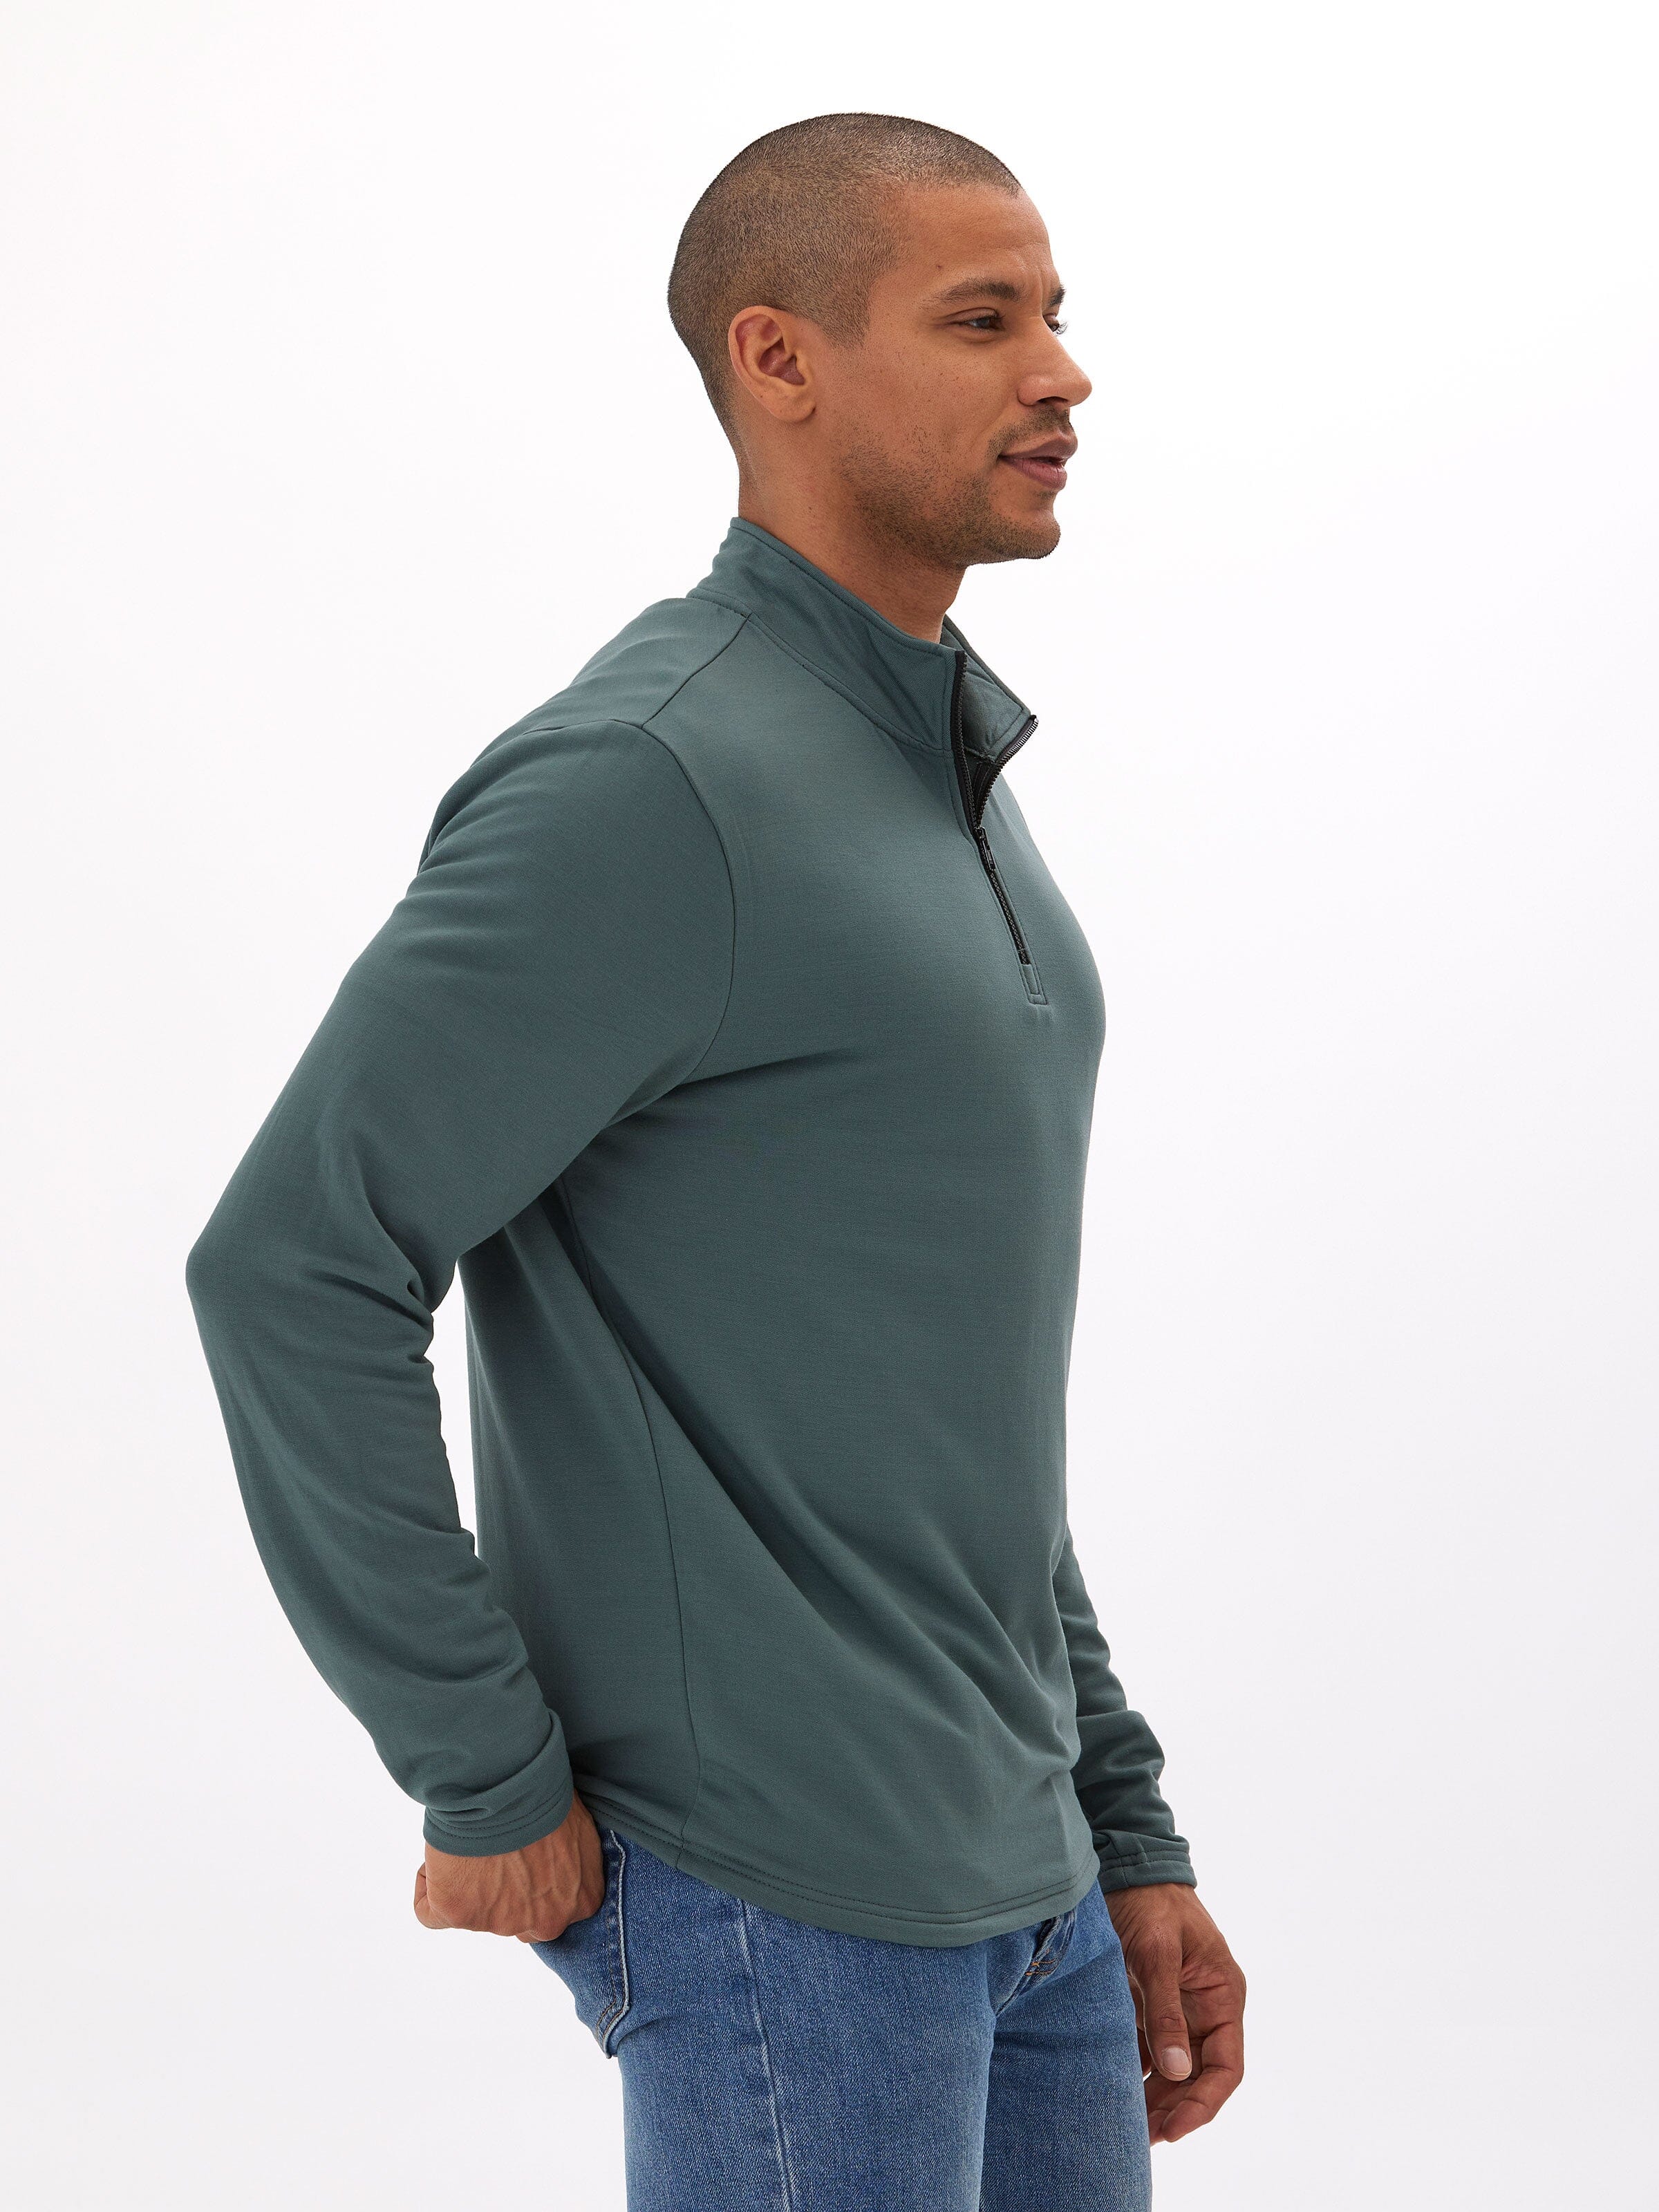 Kace Modal Fleece 1/4-Zip Mock Neck Mens Outerwear Sweatshirt Threads 4 Thought 